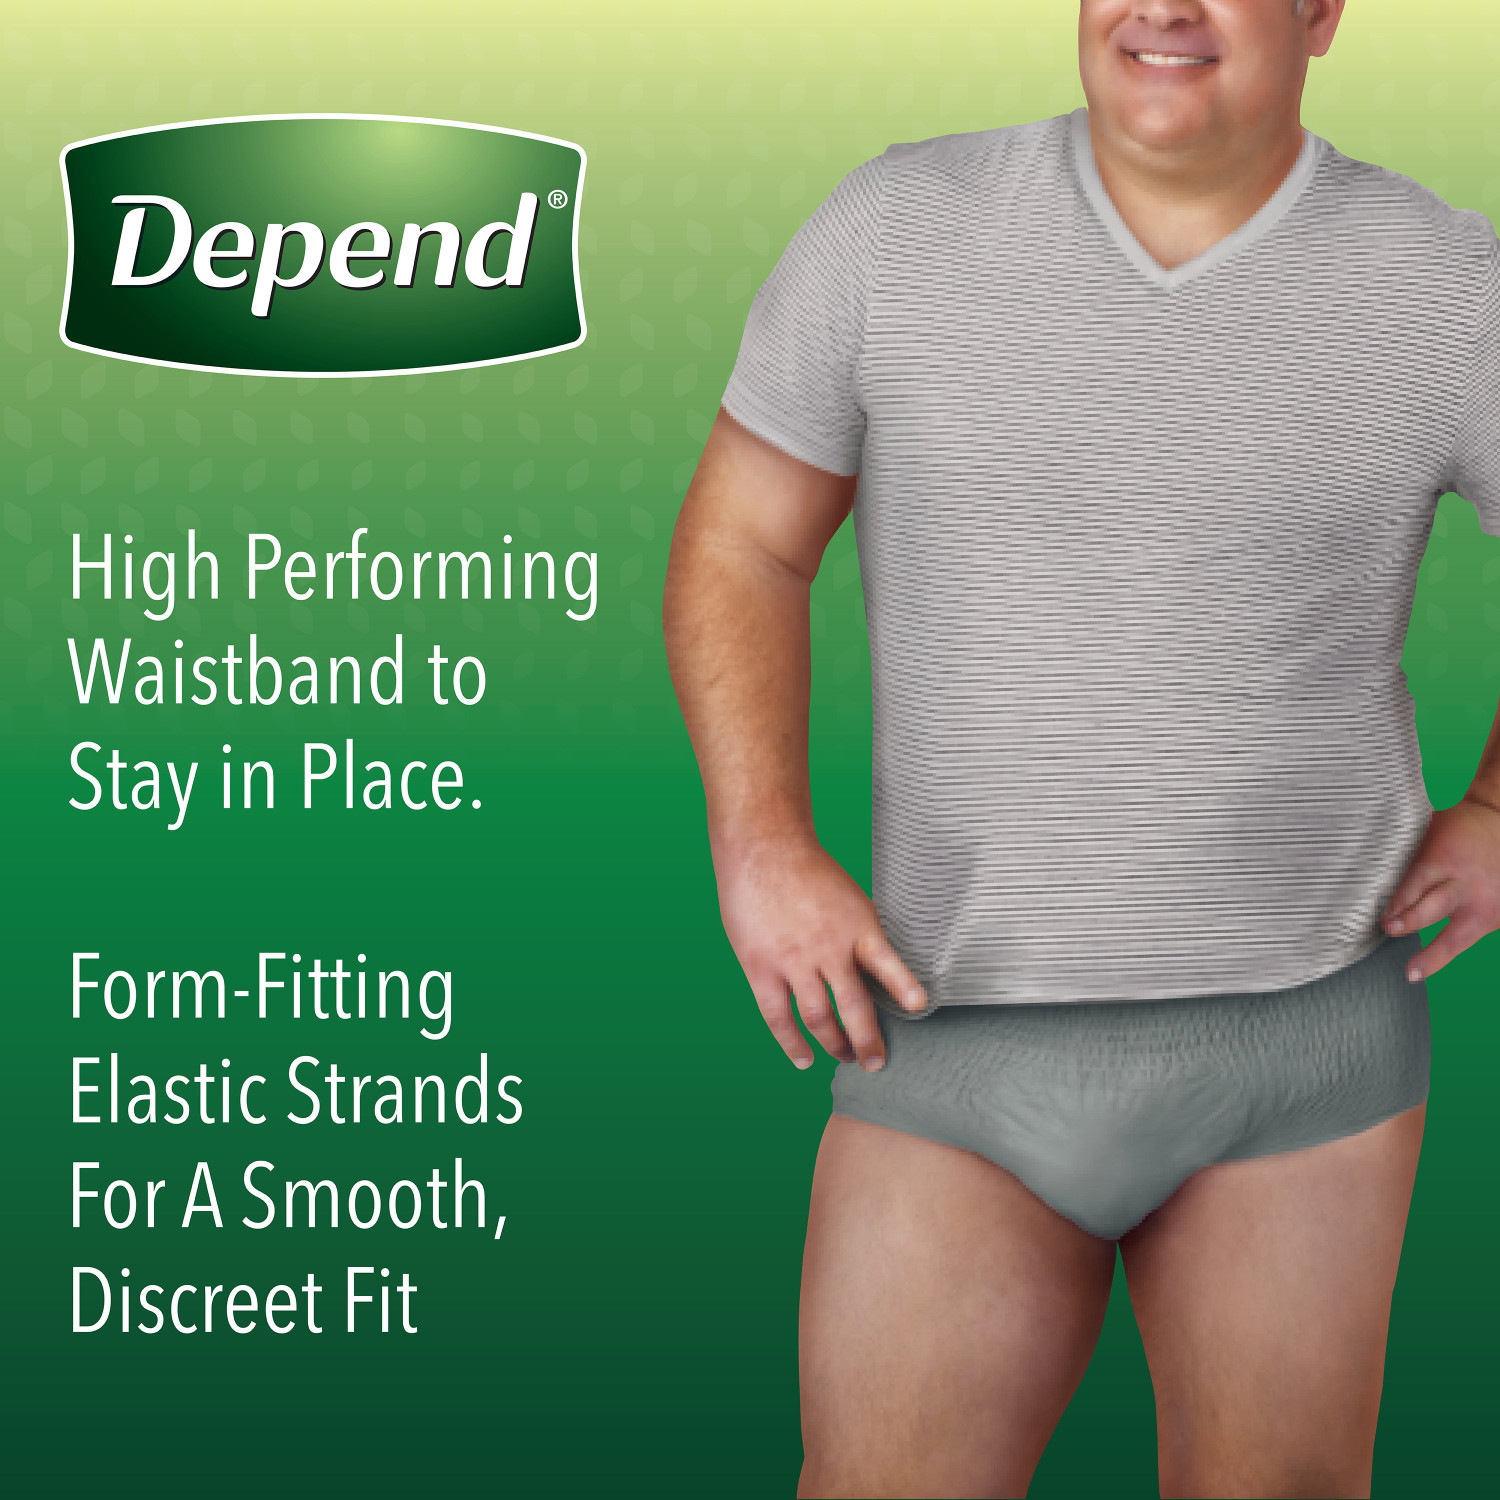 Depend Women 28 Count Large Fit-Flex Underwear Maximum Absorbency